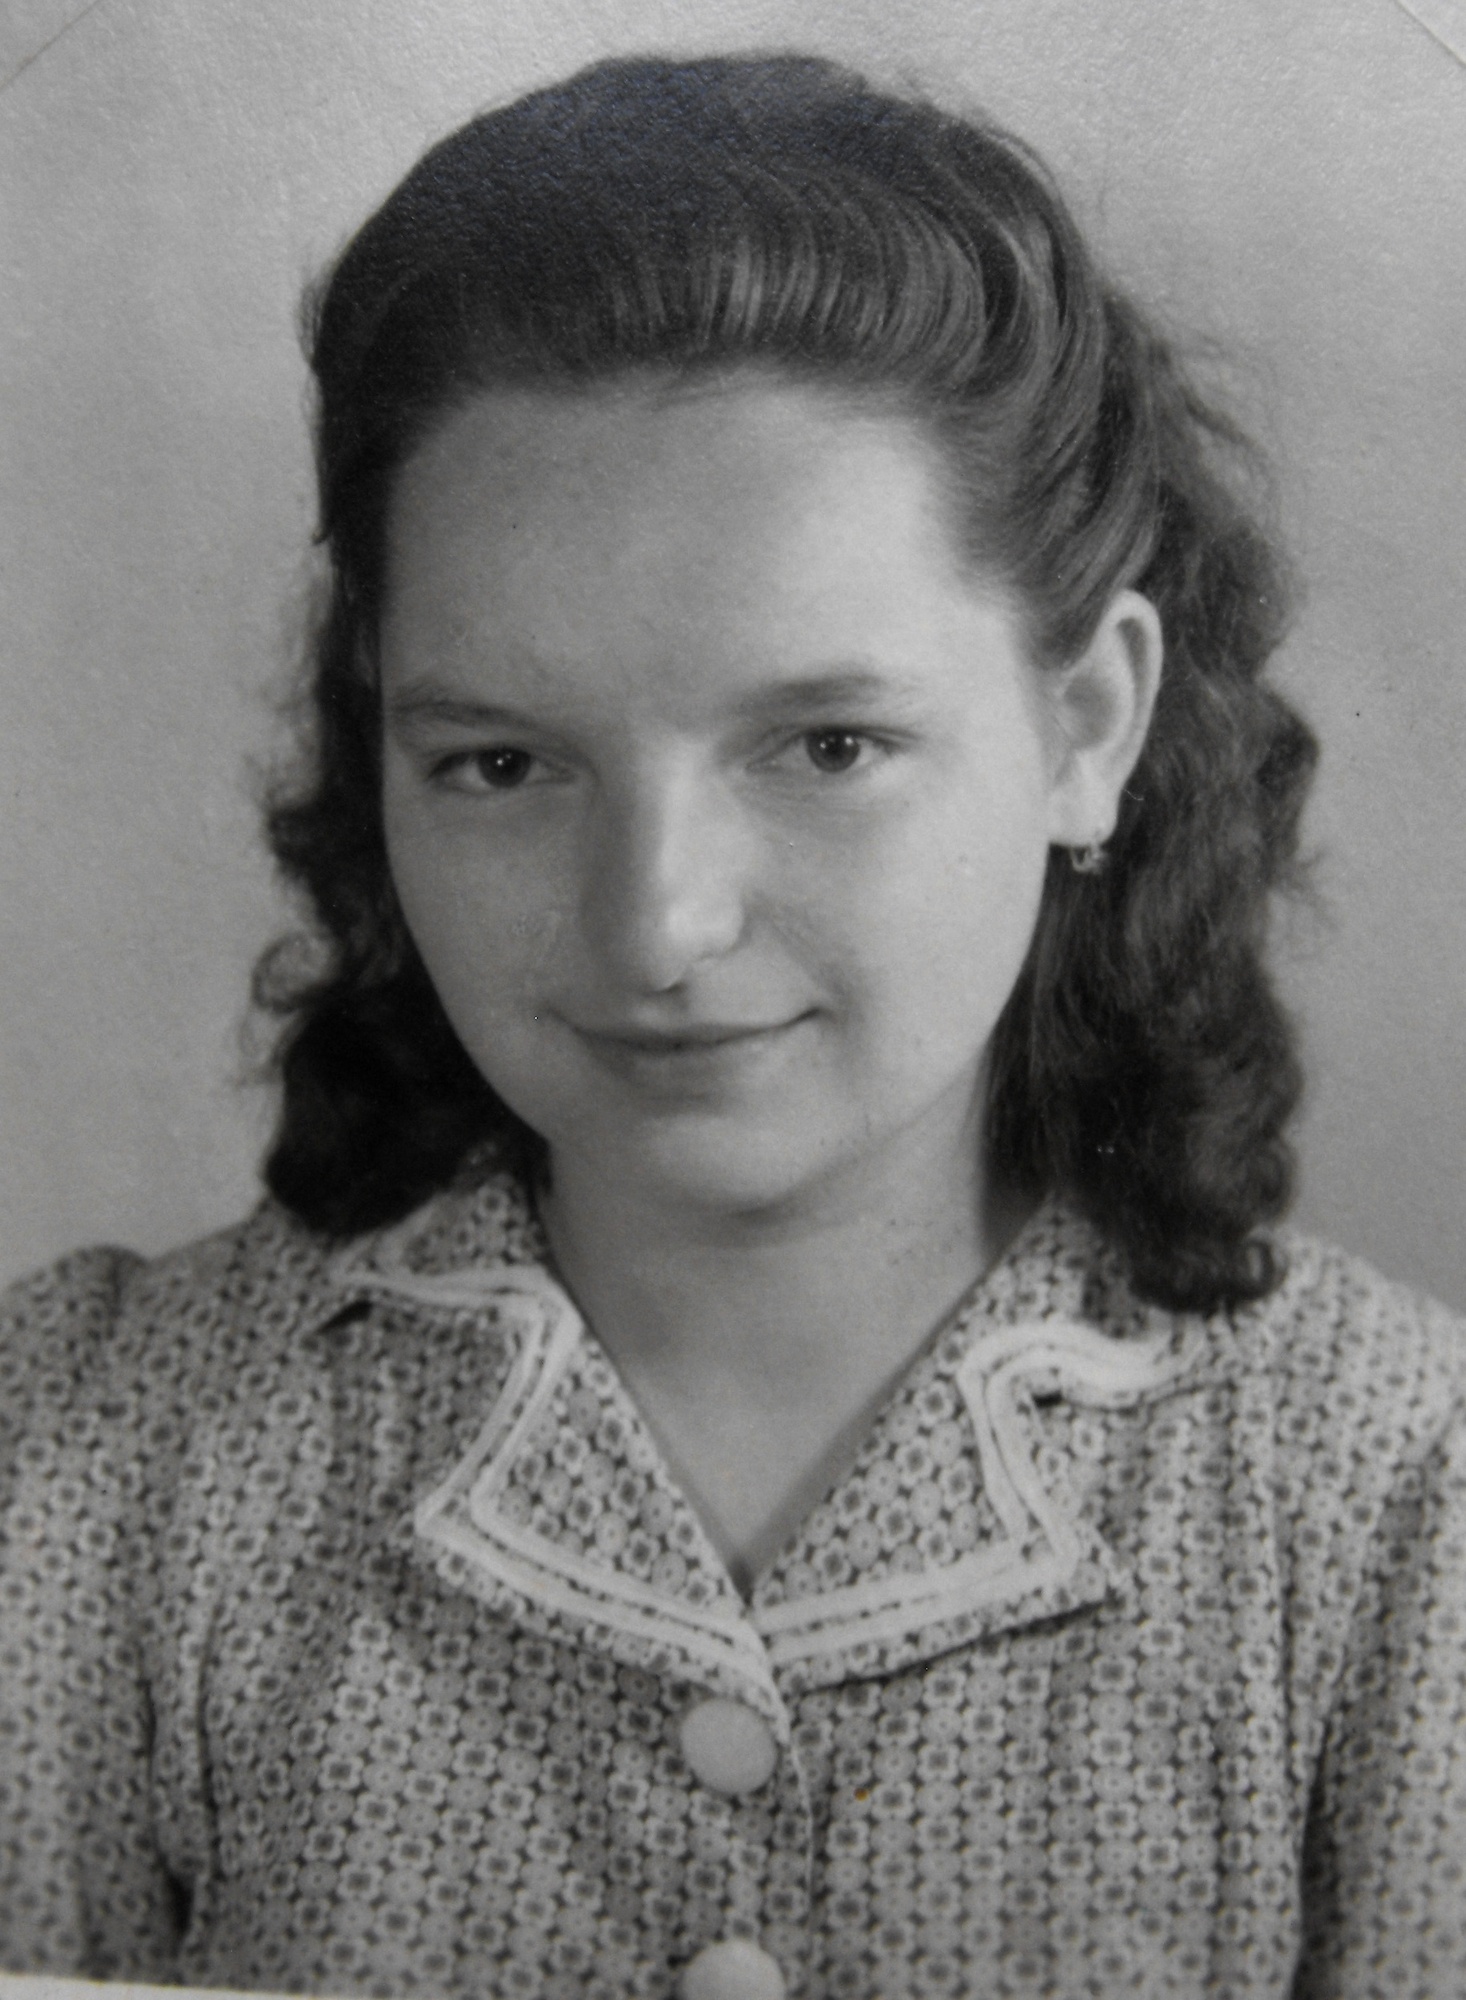 Anna in the labour camp, Glashütte, 1944